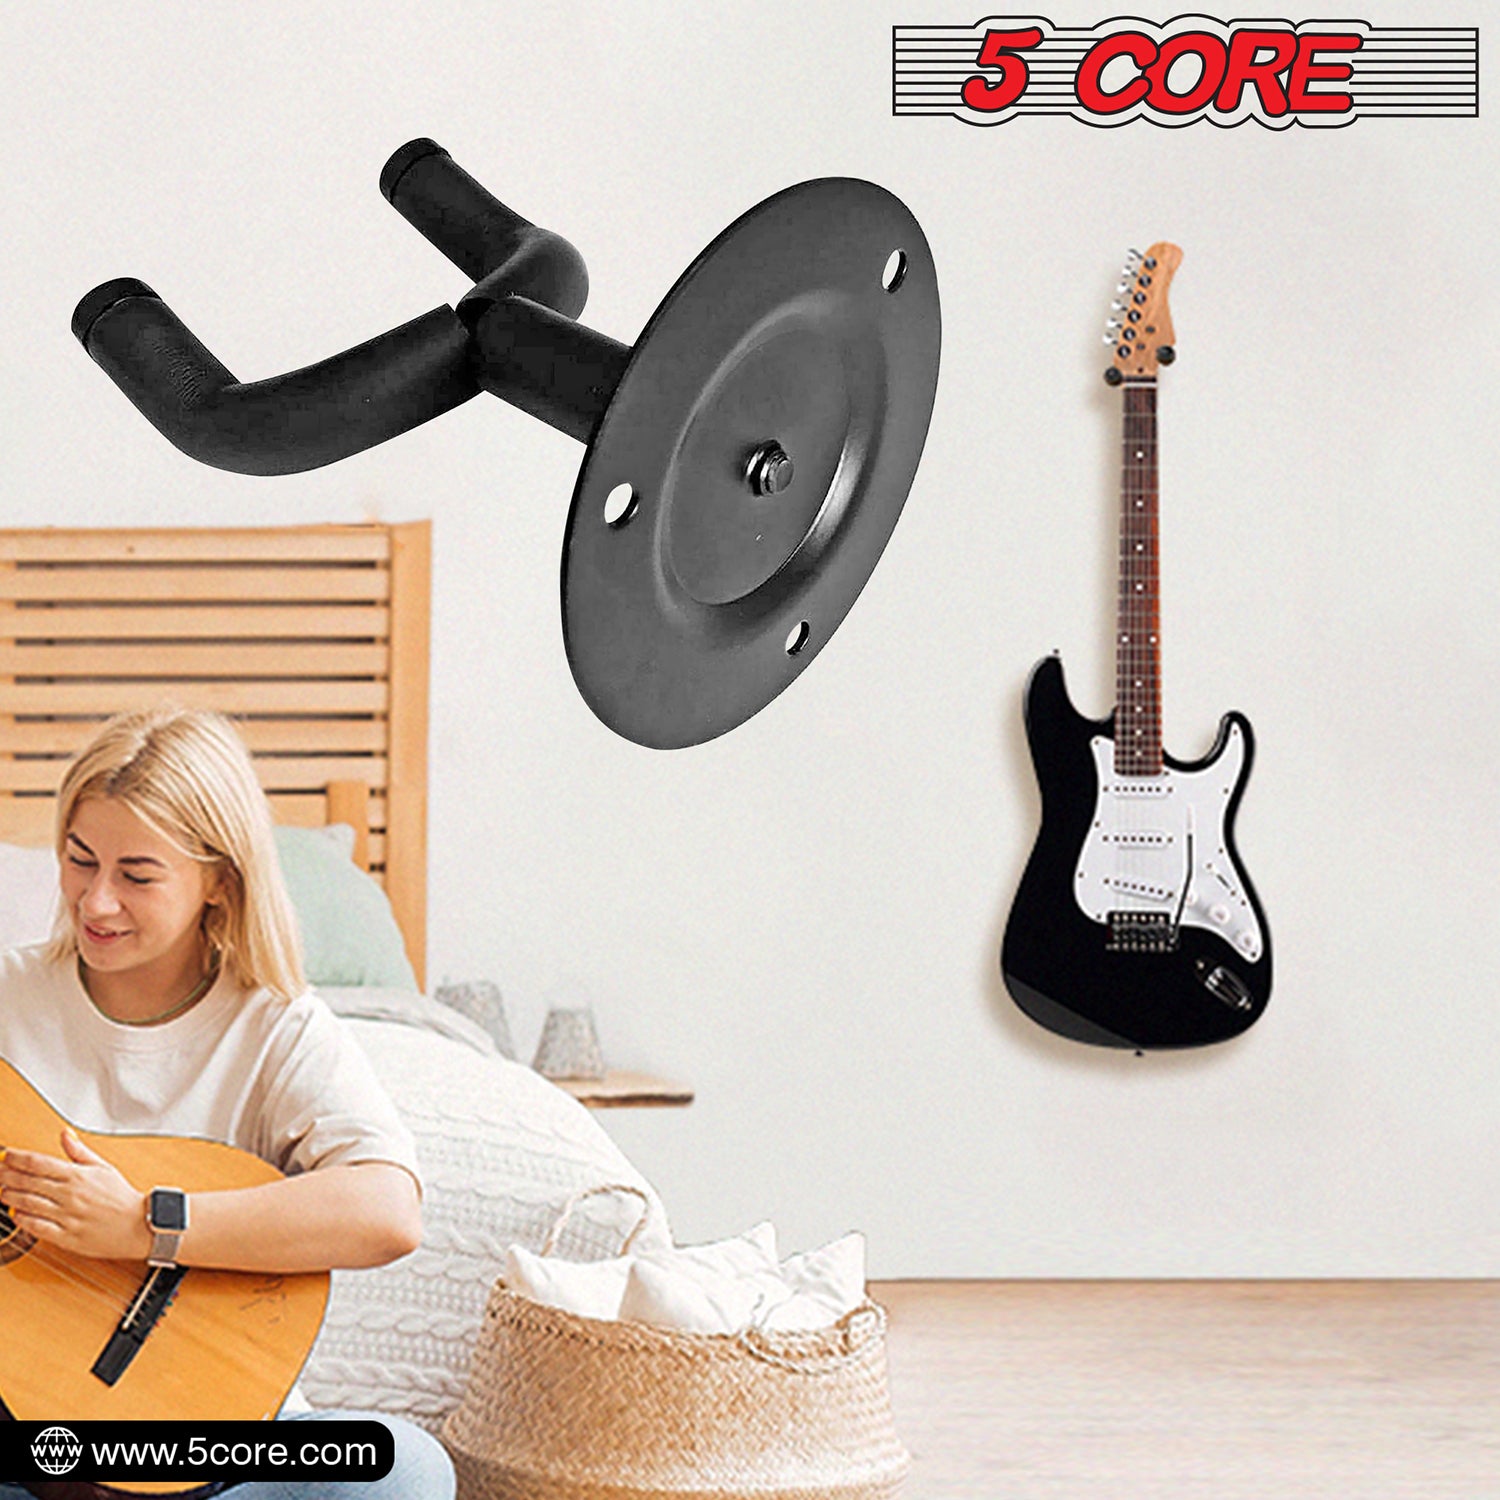 5 Core Guitar Wall Mount Hanger Display Guitar Wall Holder Hook w Screws Soft Padding